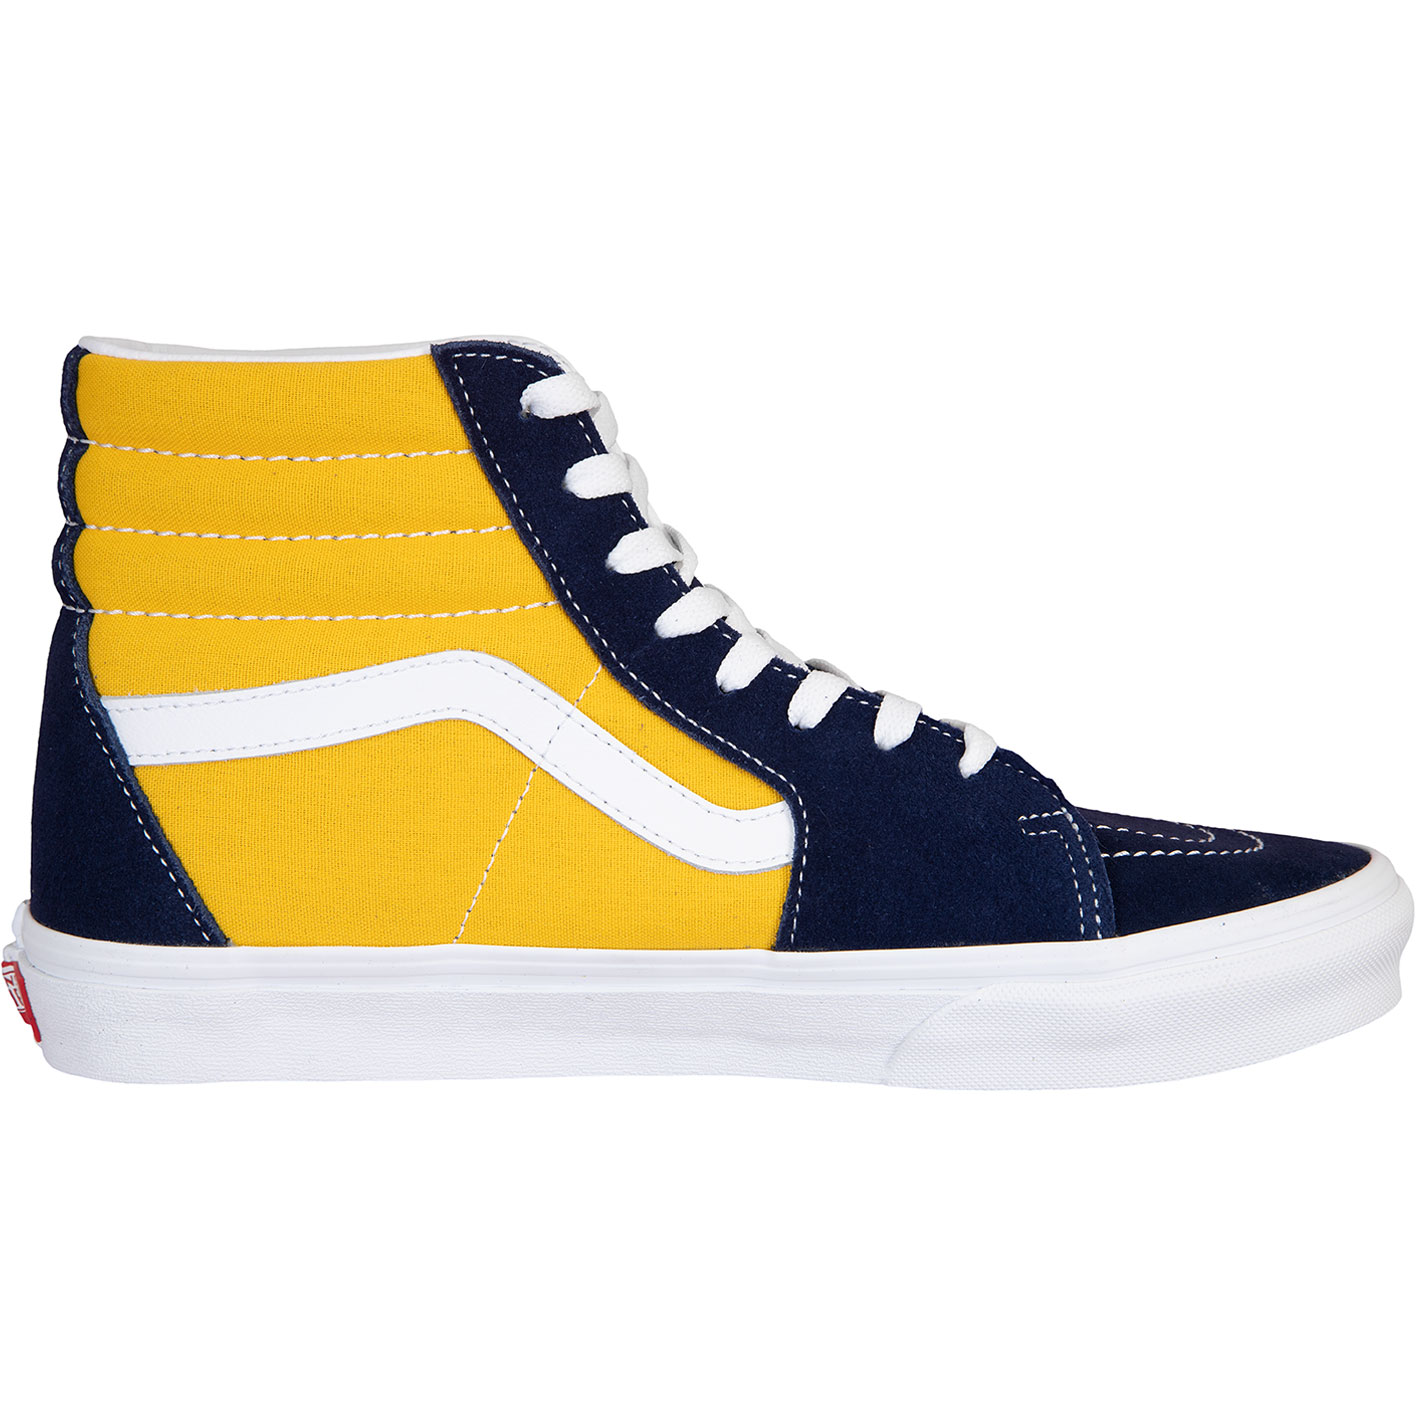 ☆ Vans Sk8-Hi Sneaker blau/gelb - hier bestellen!